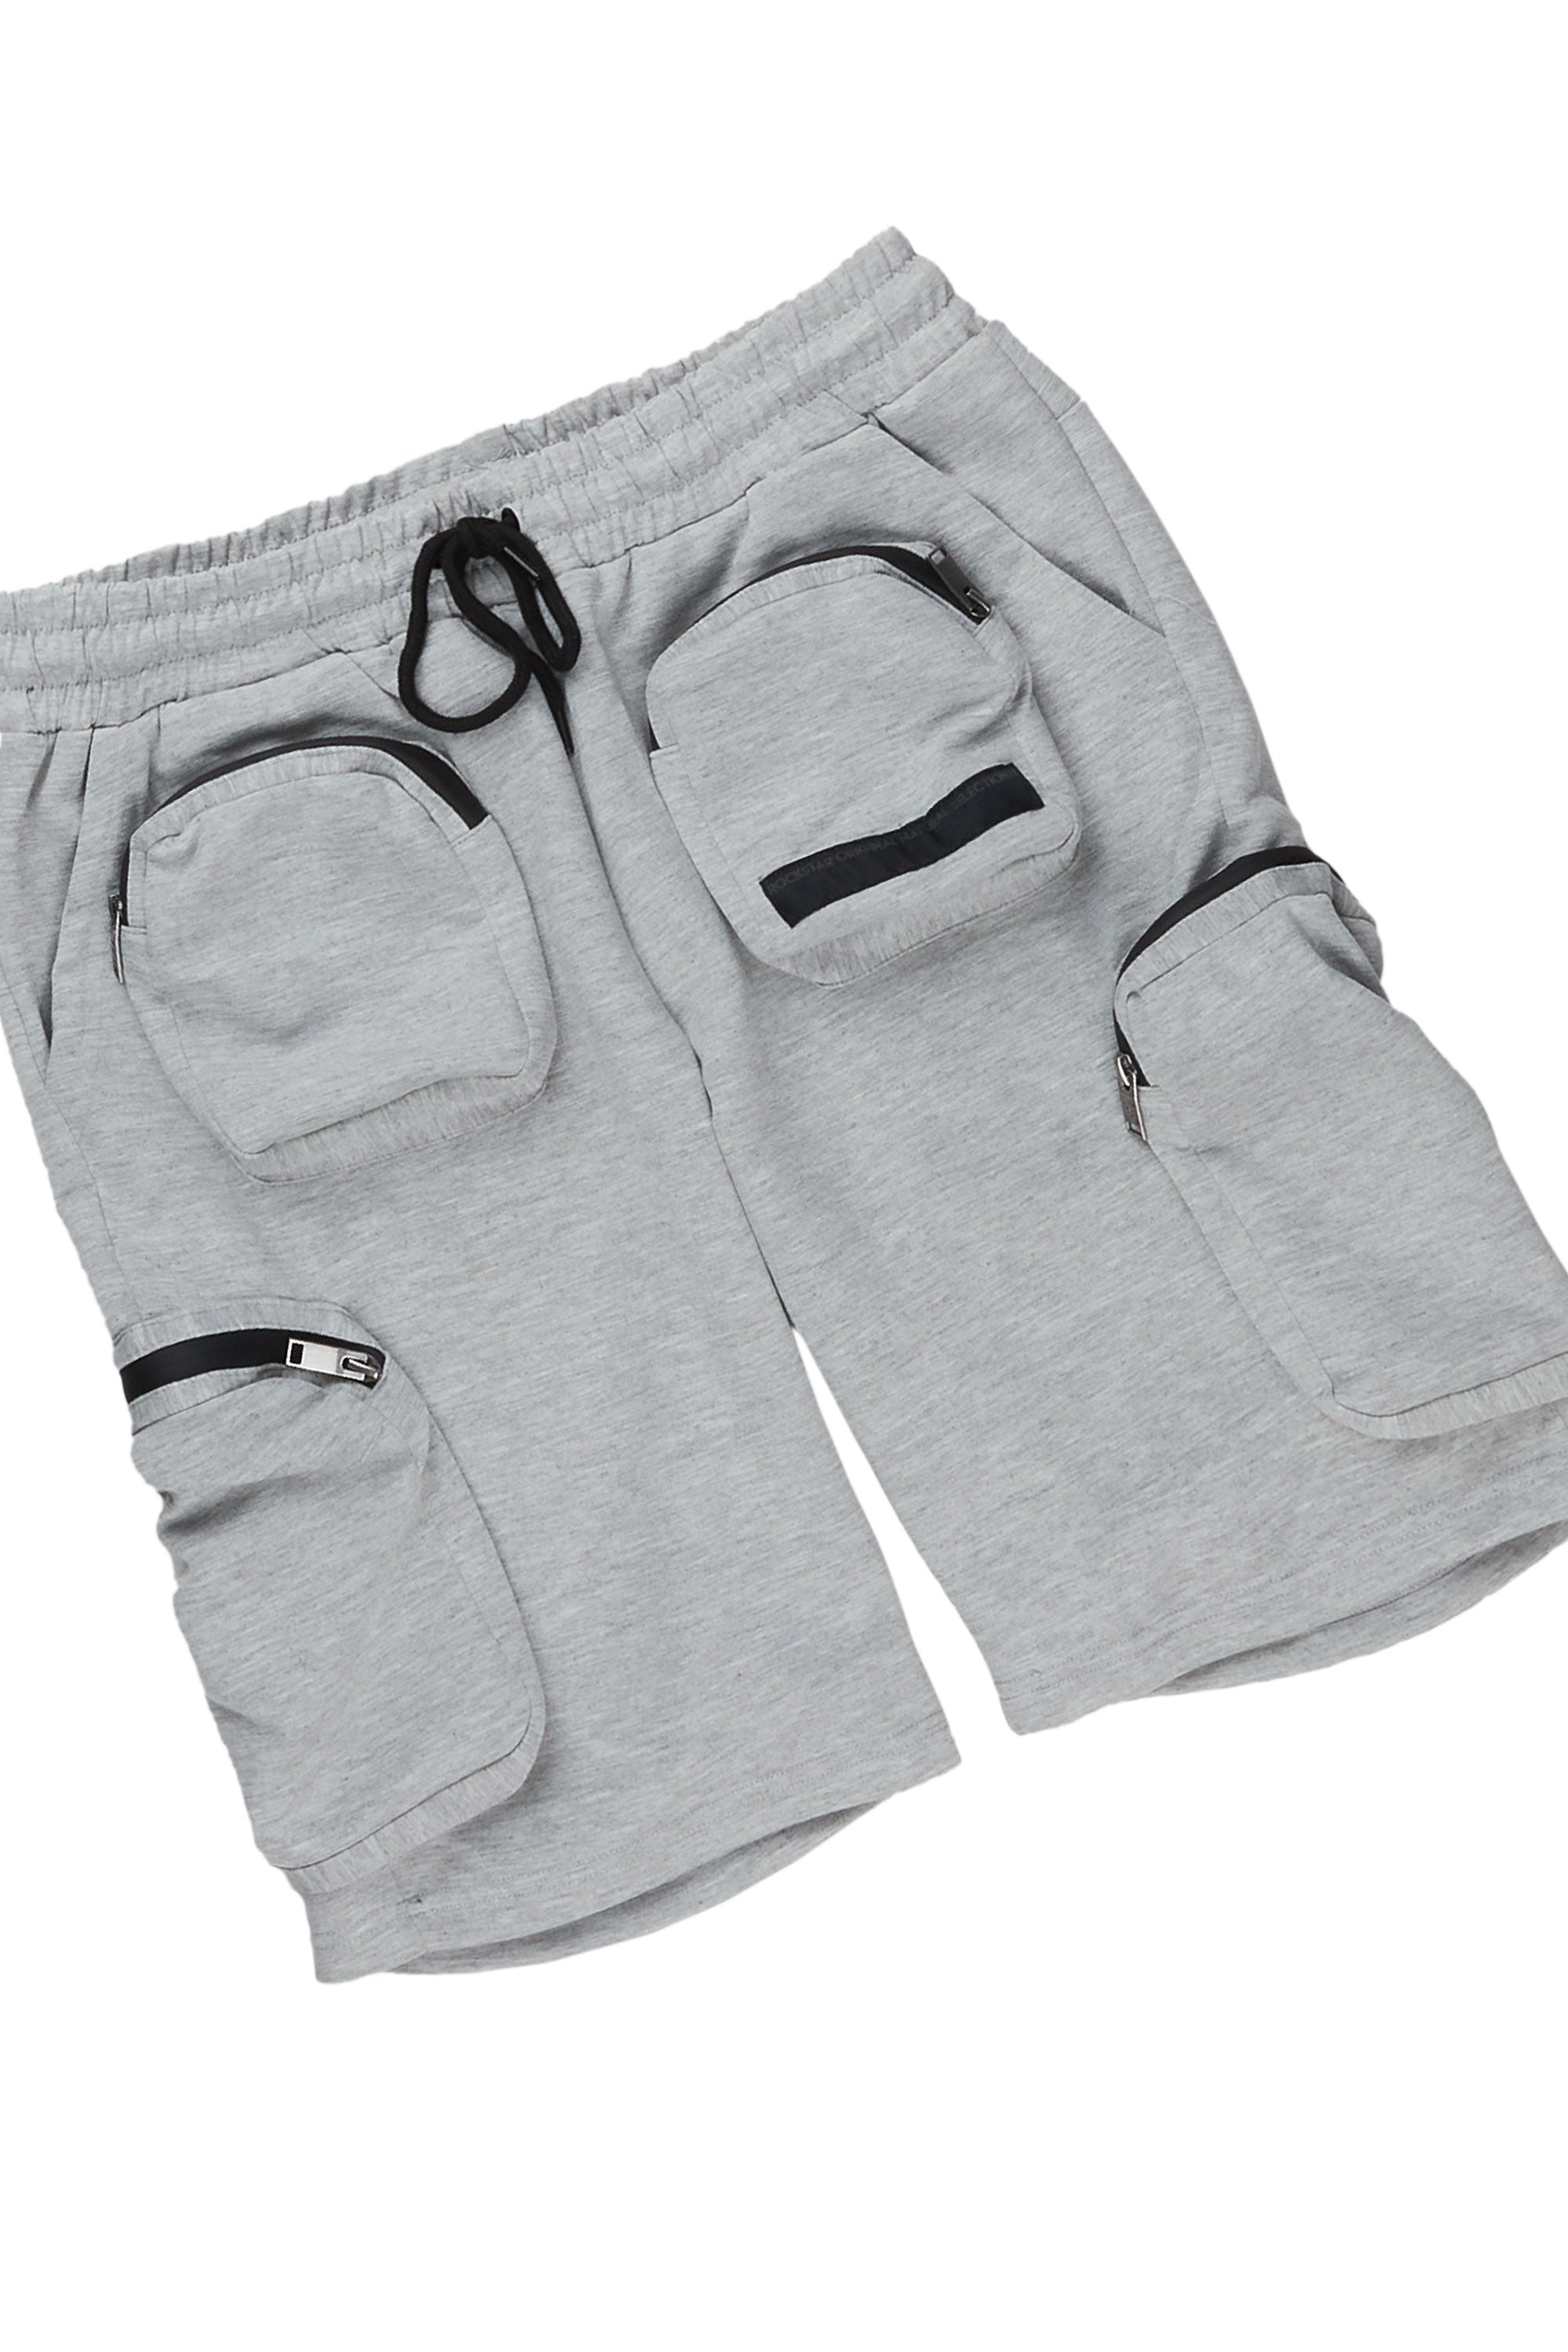 Octavio Black/Grey T-Shirt Cargo Short Set